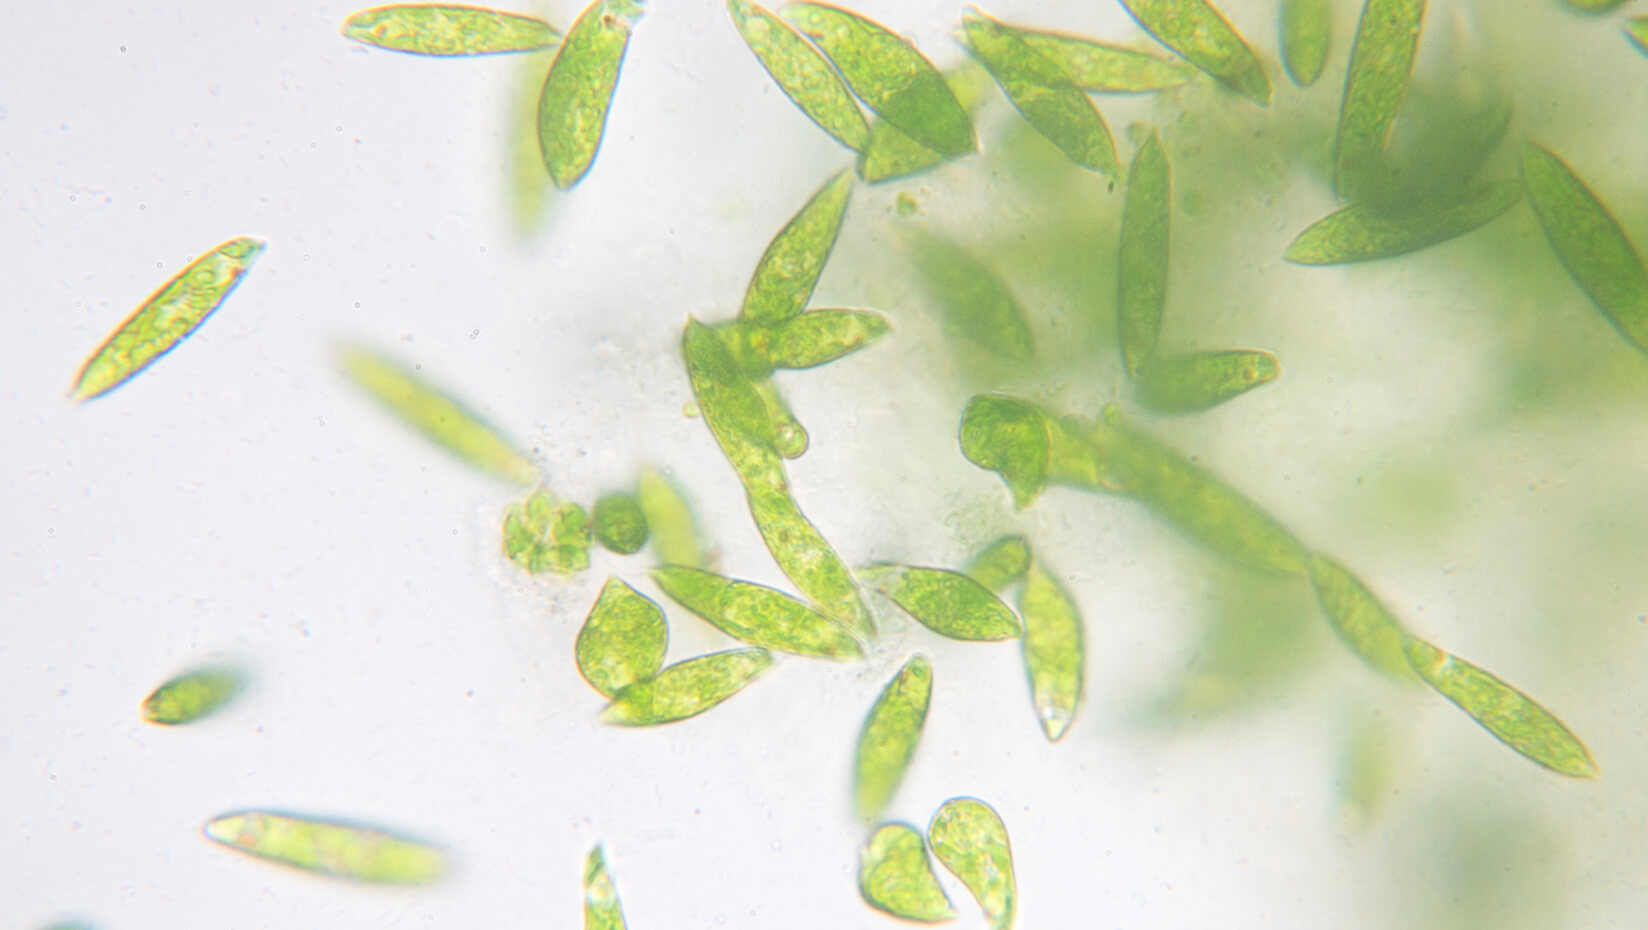 emannuel-boss-phytoplankton-news